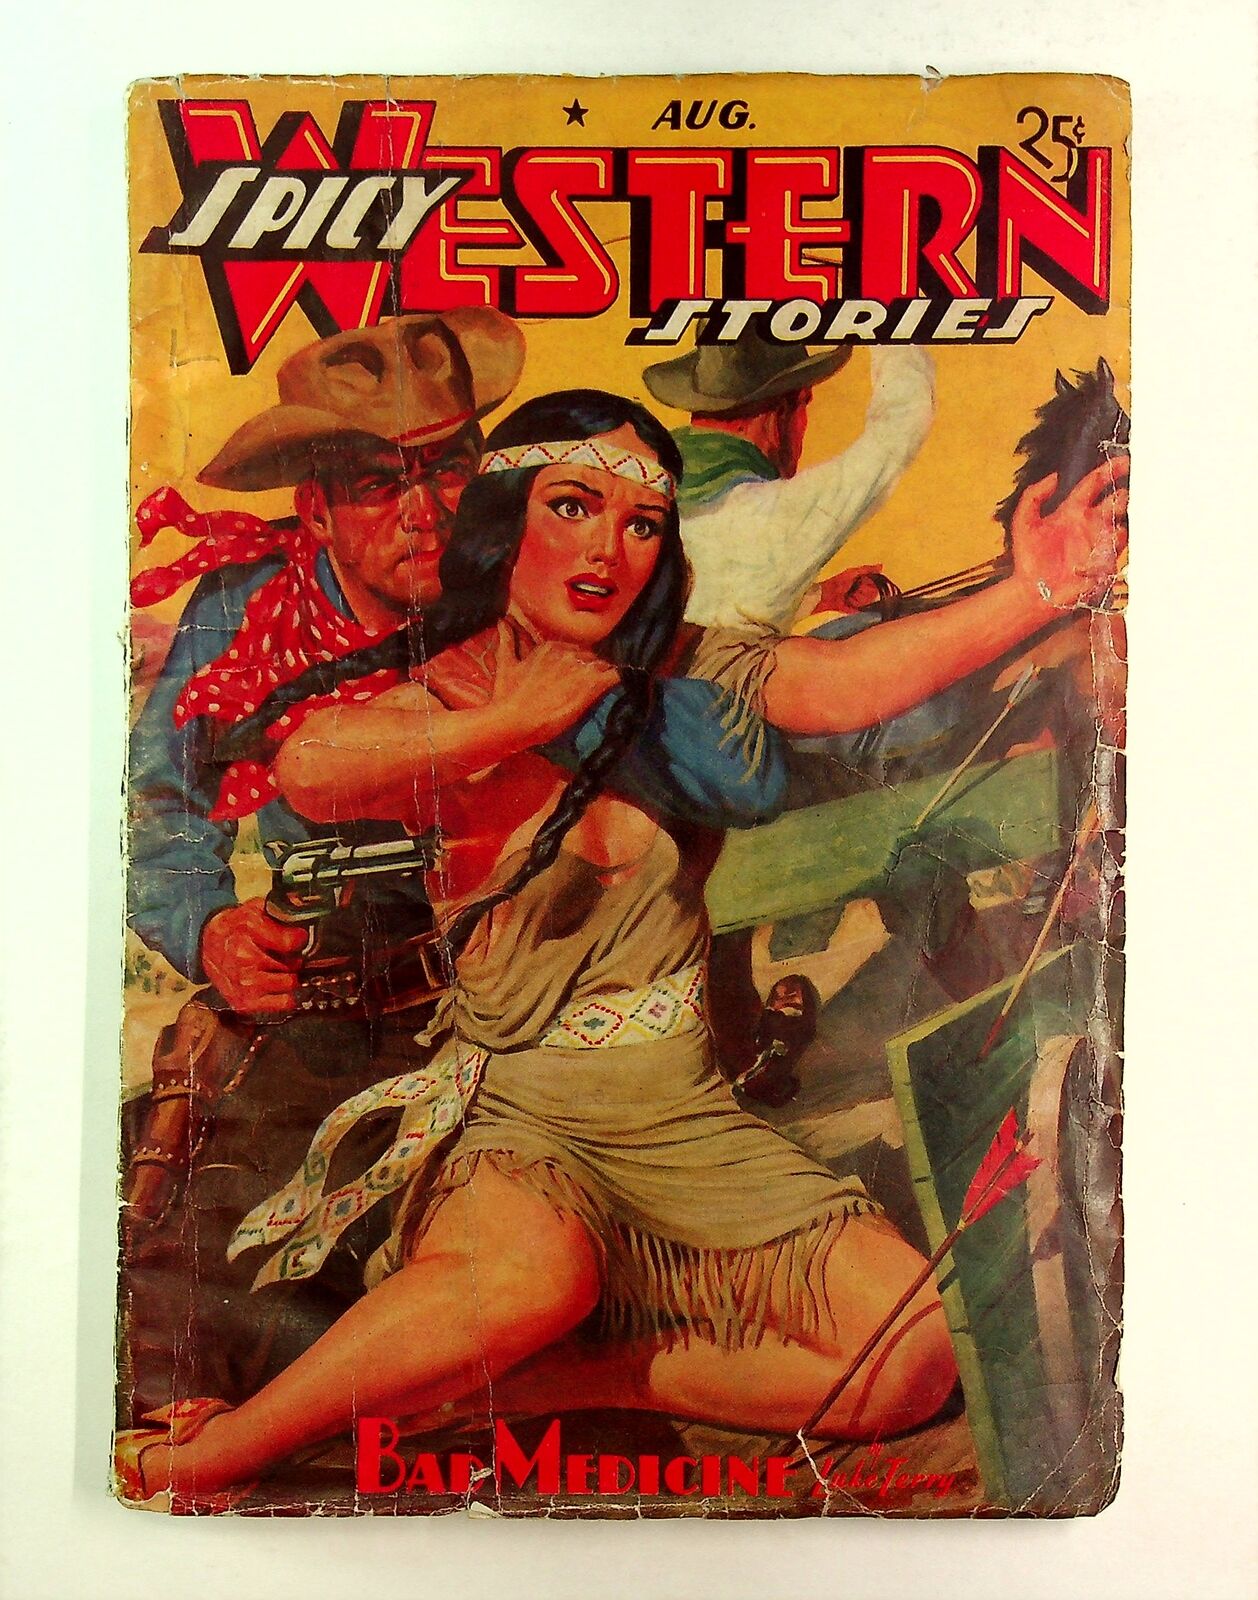 Spicy Western Stories Pulp Aug 1938 Vol. 4 #3 GD